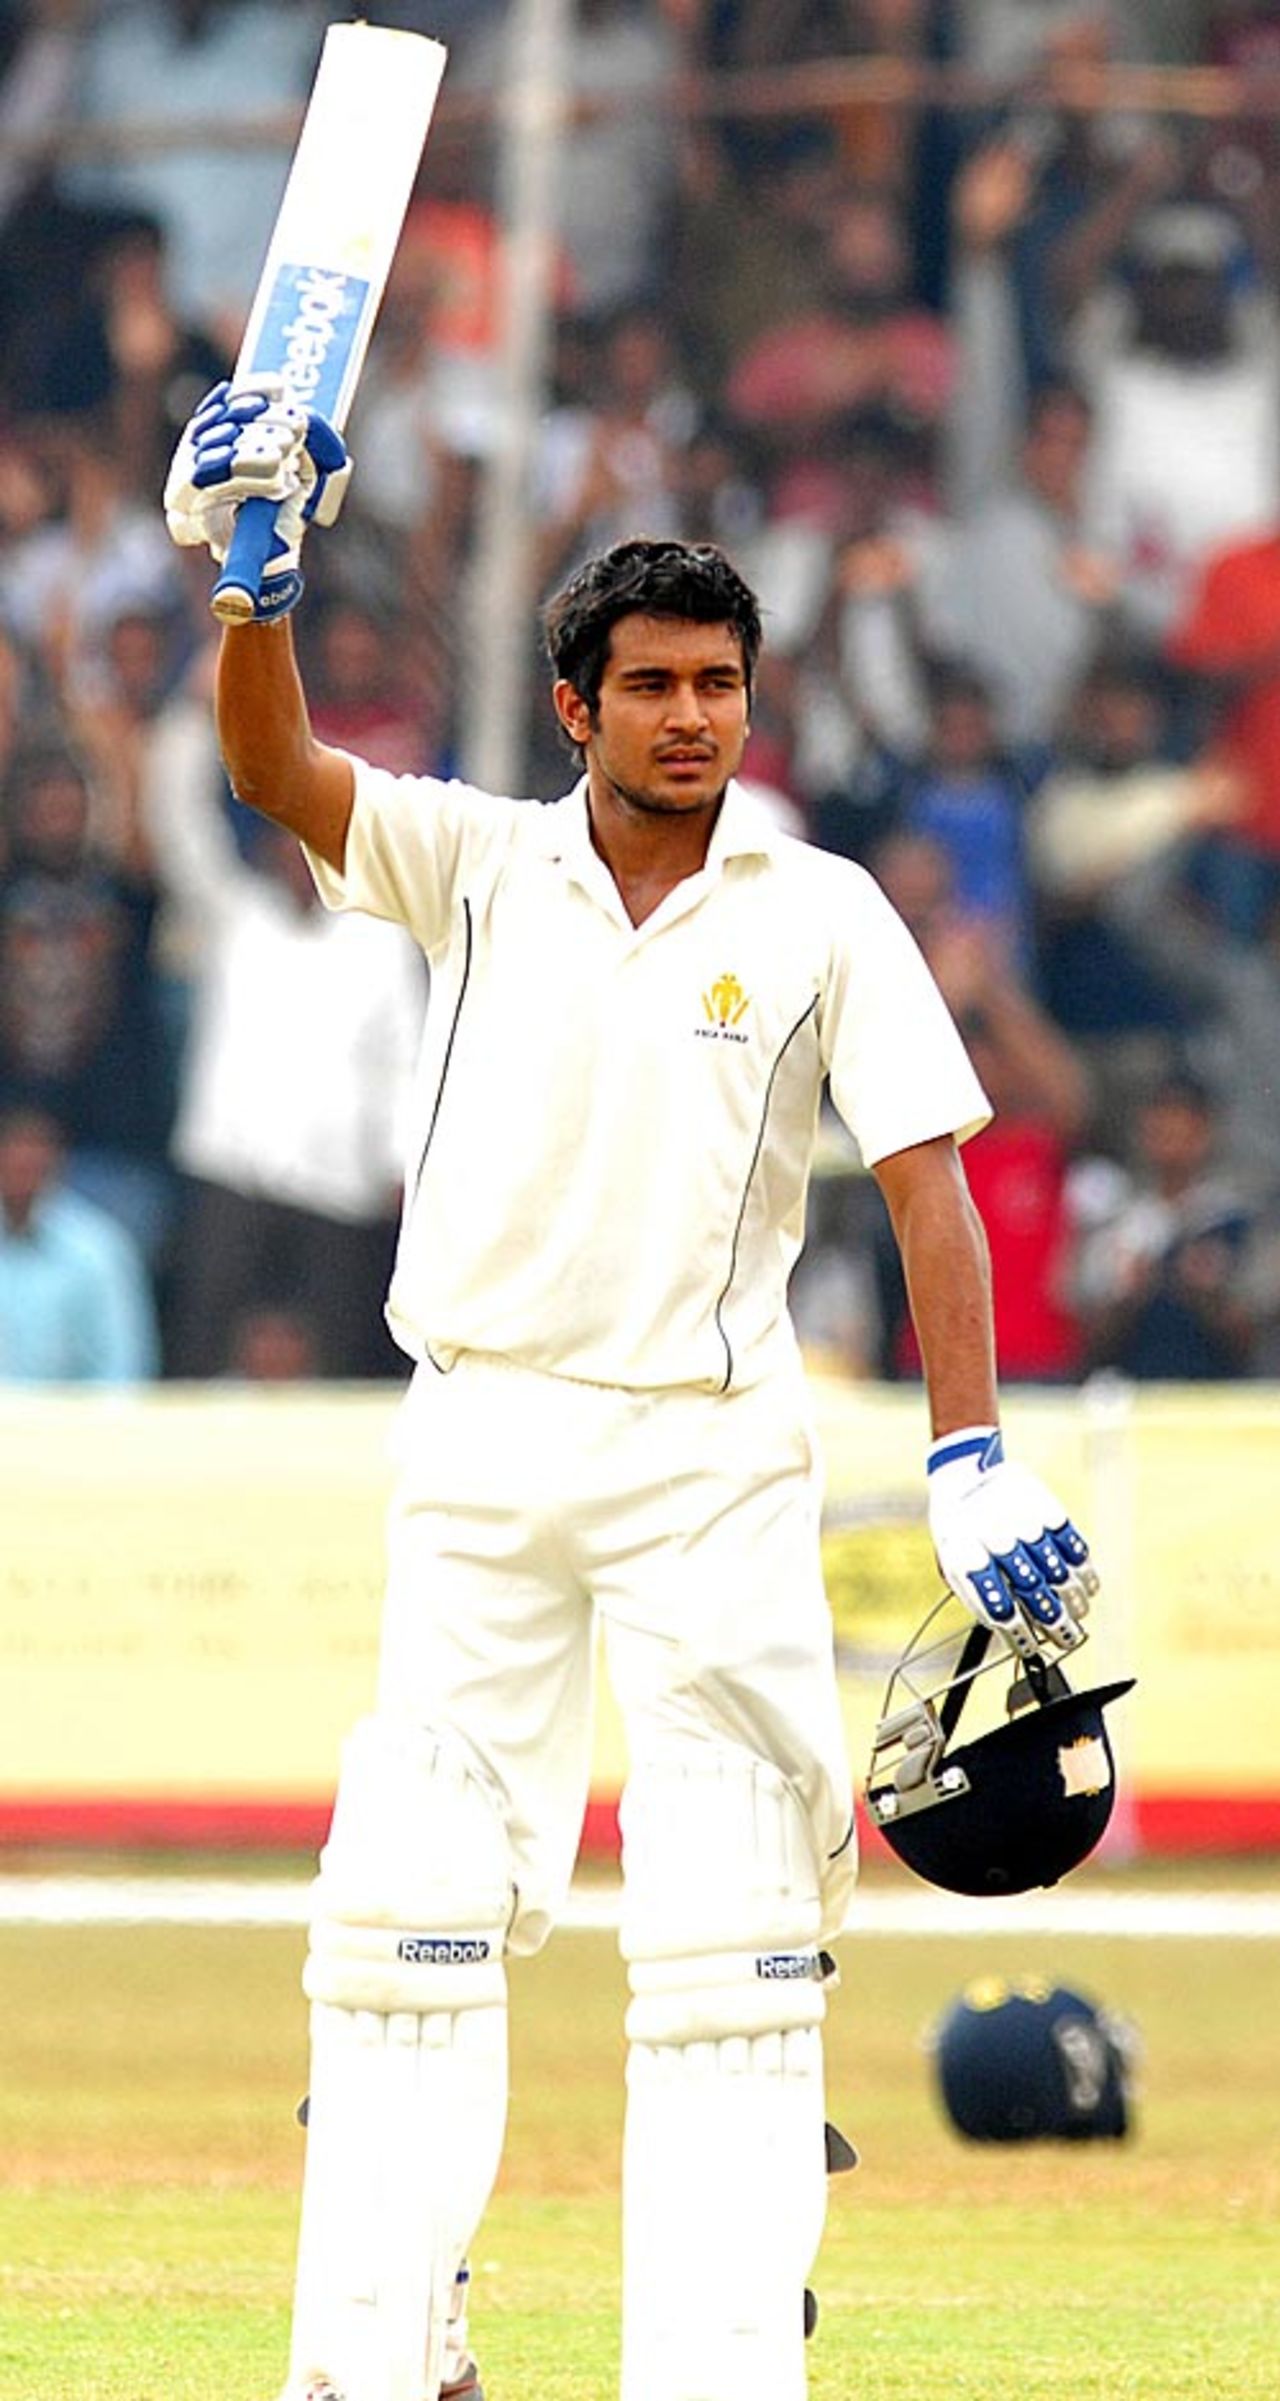 Manish Pandey raises his bat after reaching his century, Karnataka v Mumbai, Ranji Trophy final, Mysore, 4th day, January 14, 2010